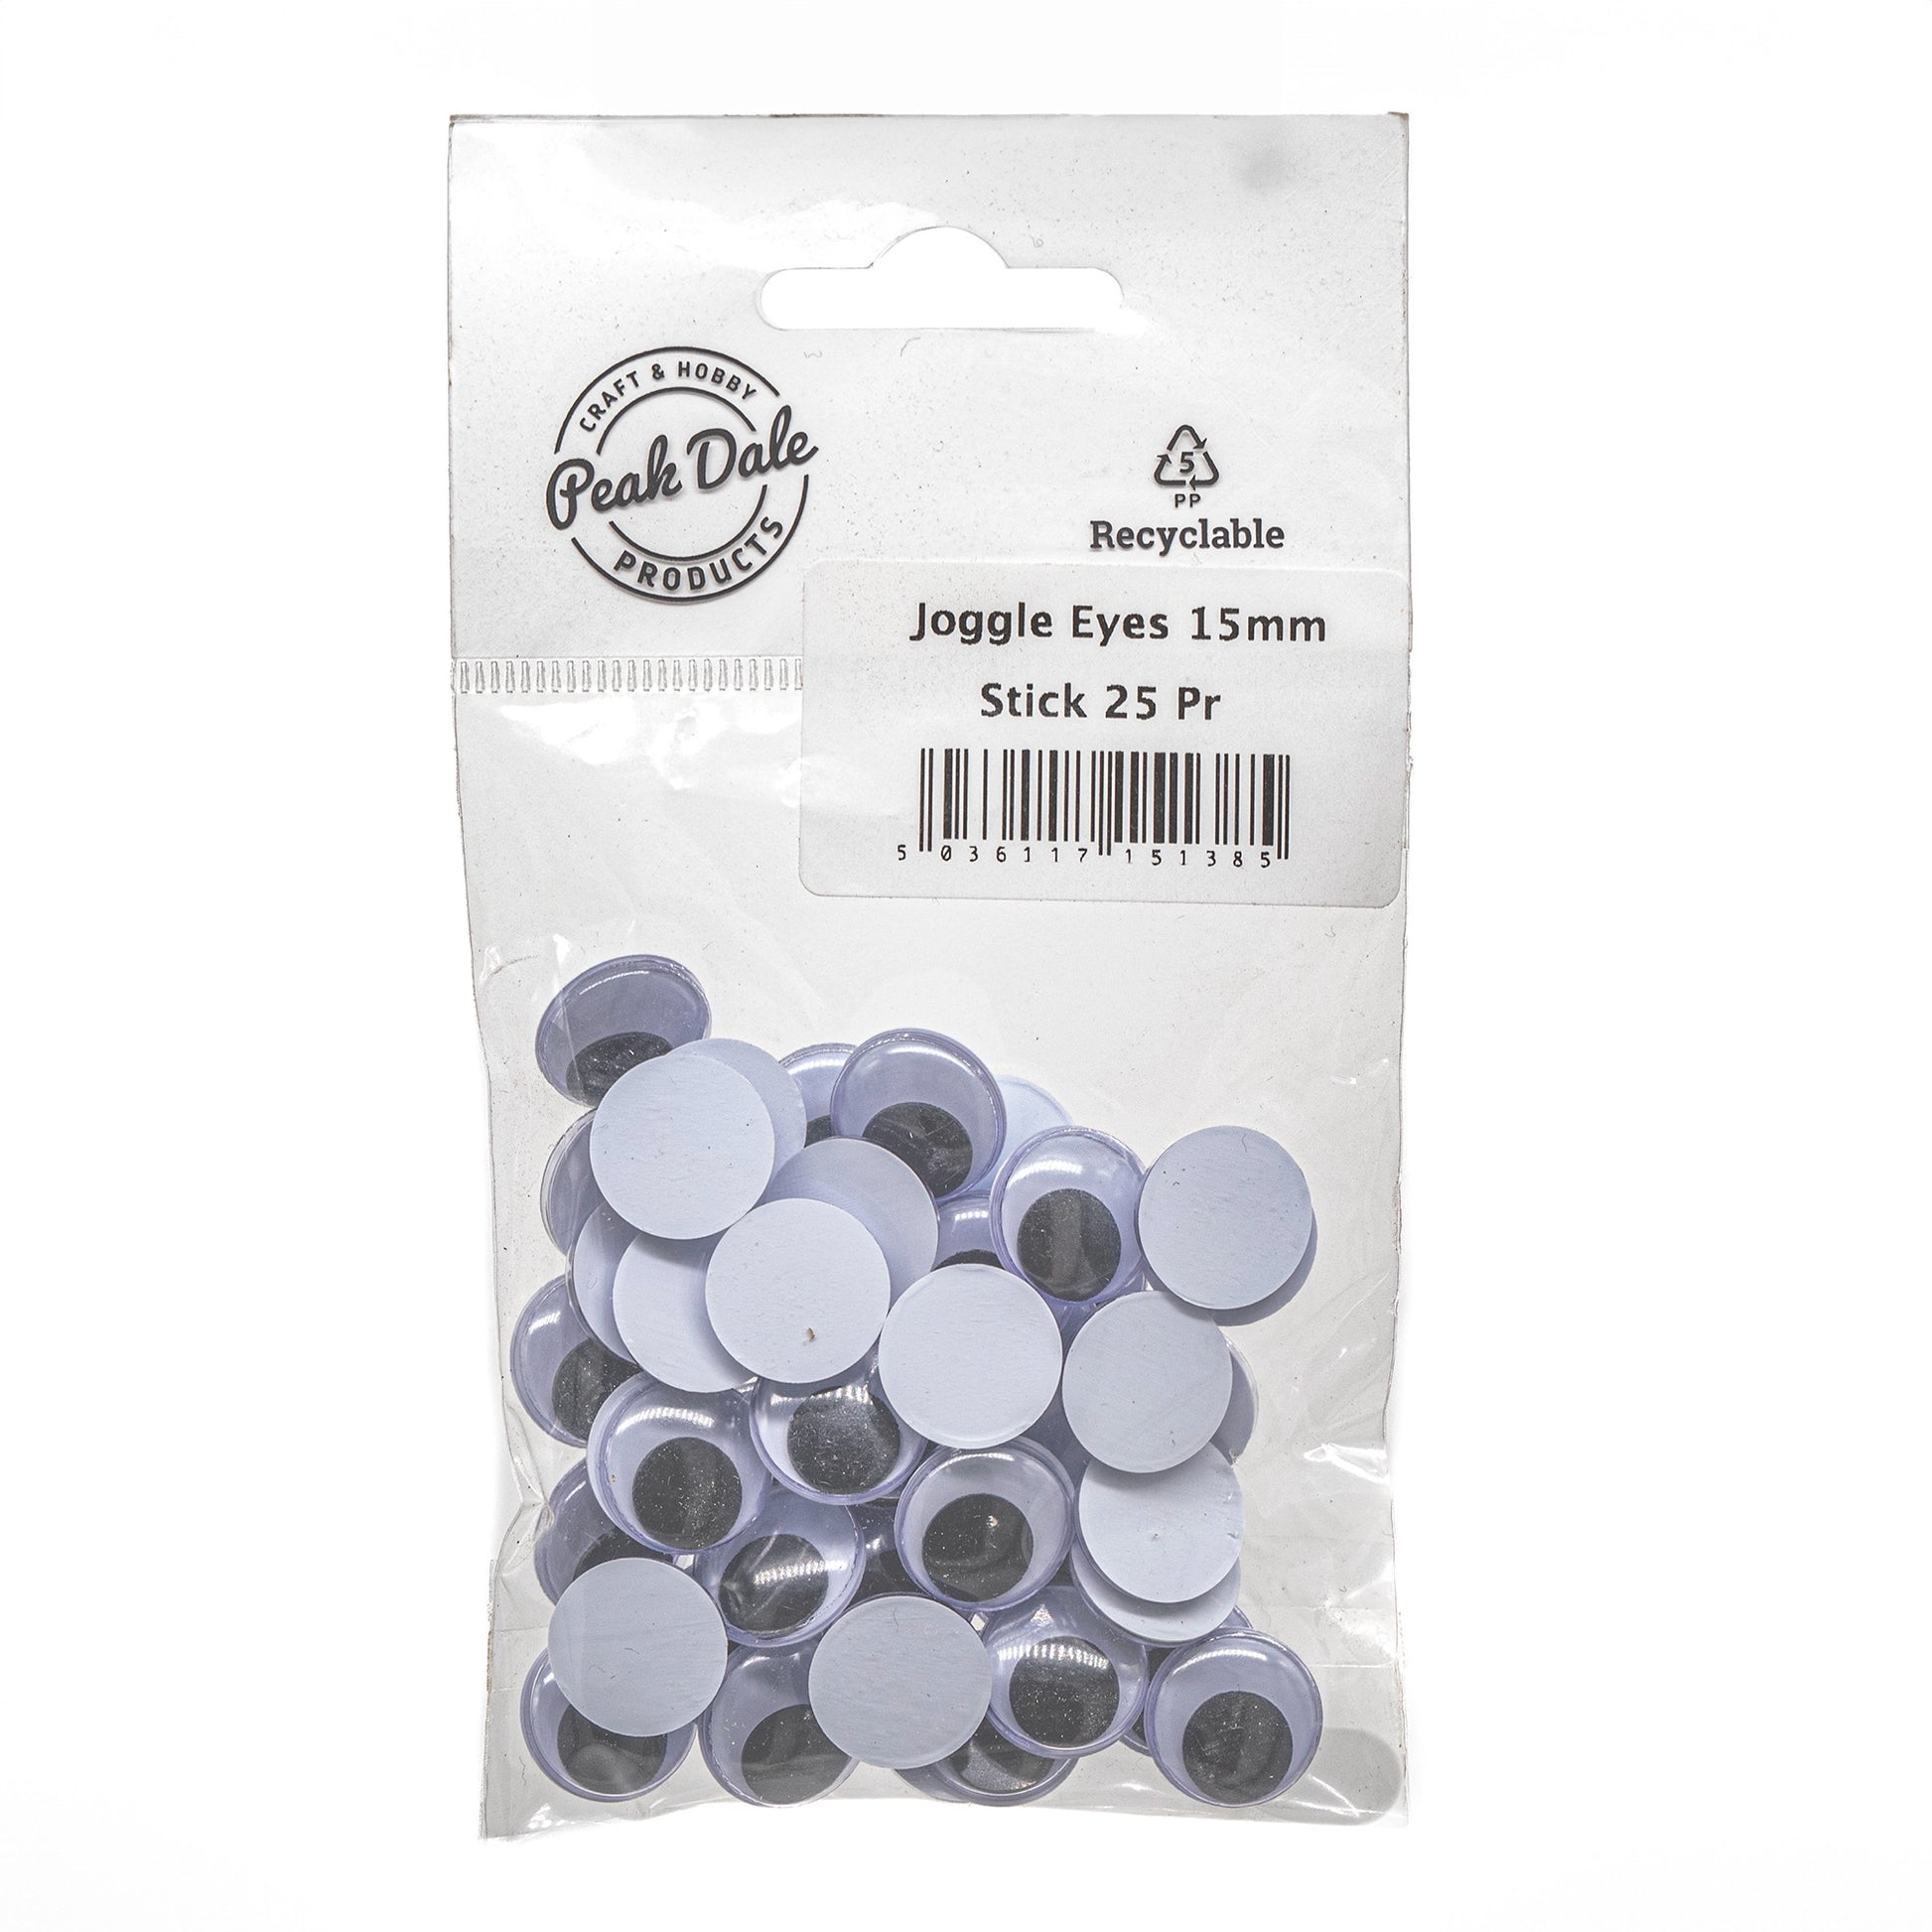 Joggle Eyes 15mm Glue On 25 Pr - Default (JEYE15M25)